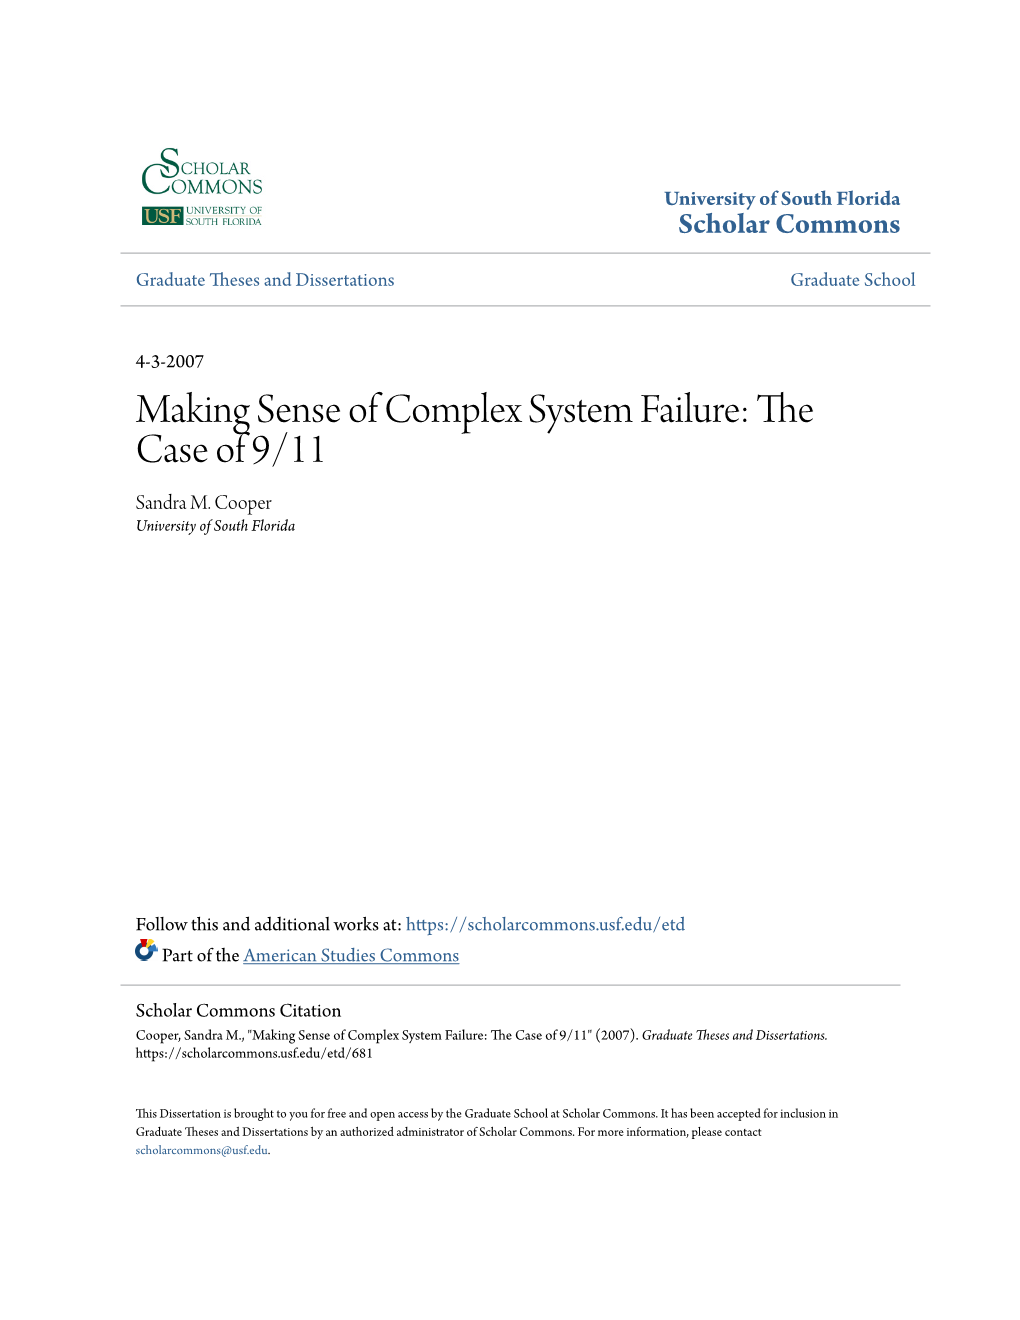 Making Sense of Complex System Failure: the Case of 9/11 Sandra M